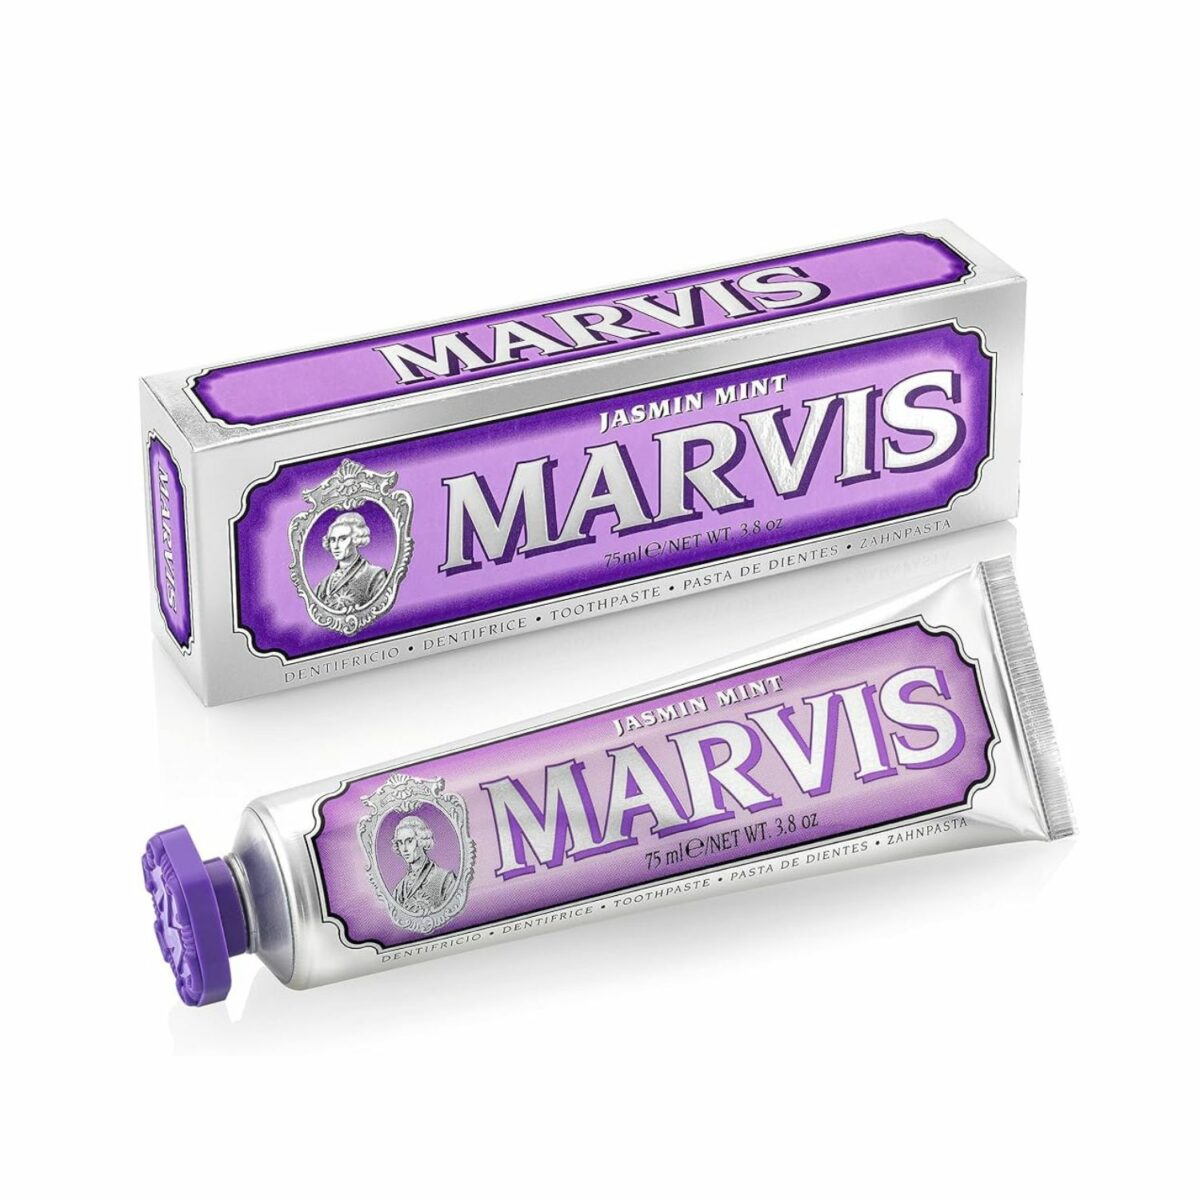 Marvis Jasmin Mint pasta za zube 85ml